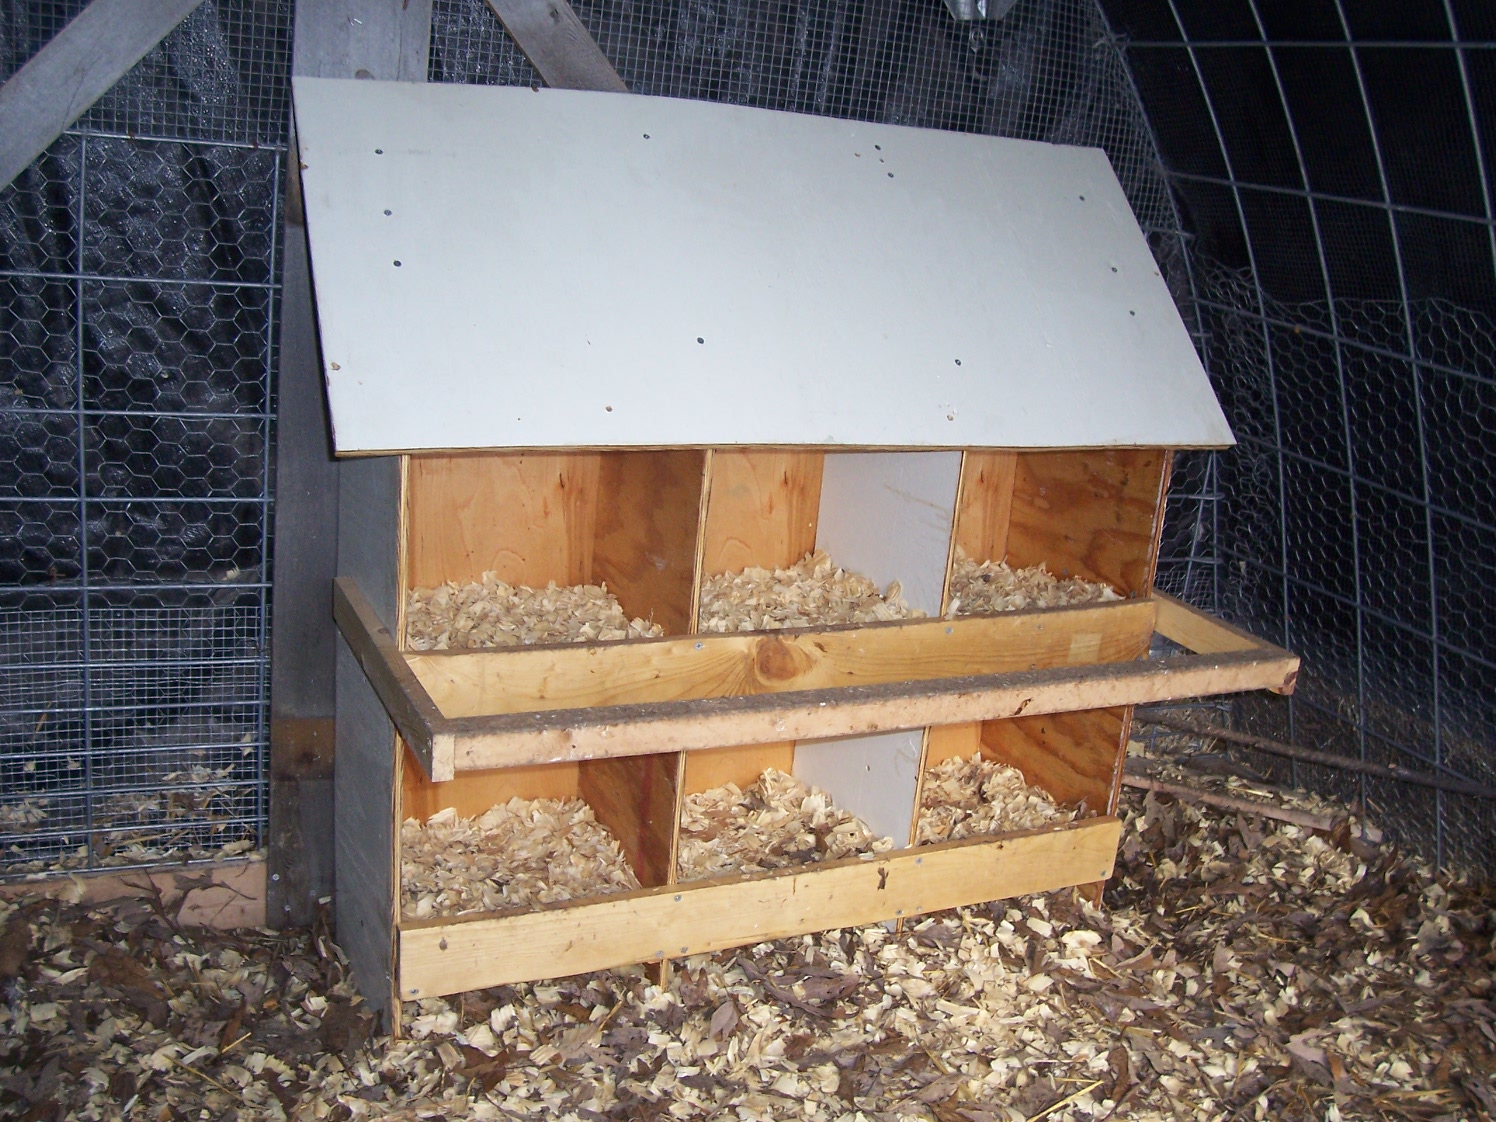  Garden Journal: A Low cost, easy to build, chicken nest box design